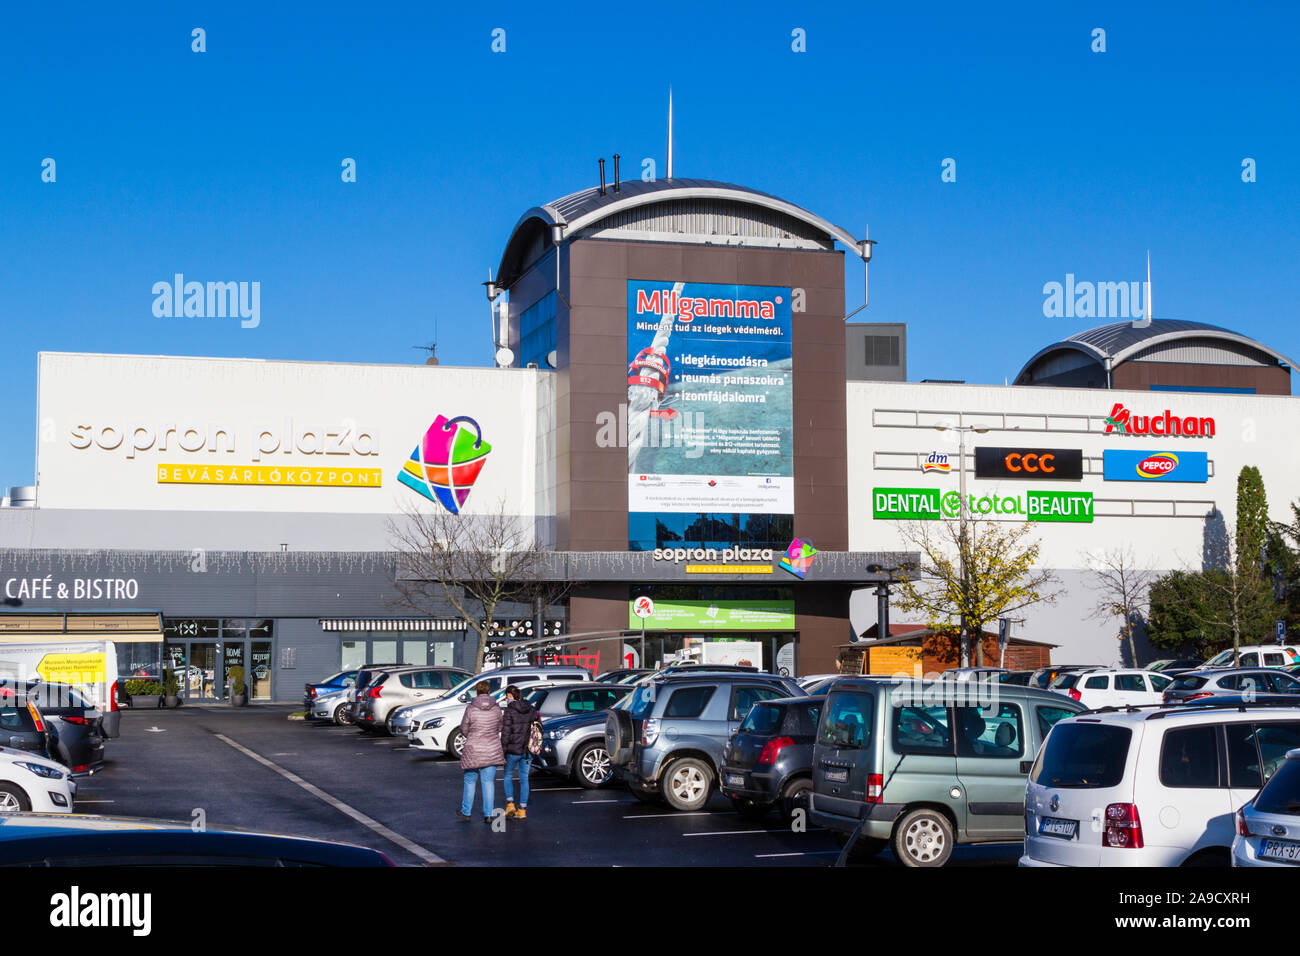 Sopron Plaza shopping centre center front and carpark, Sopron, Hungary Stock Photo